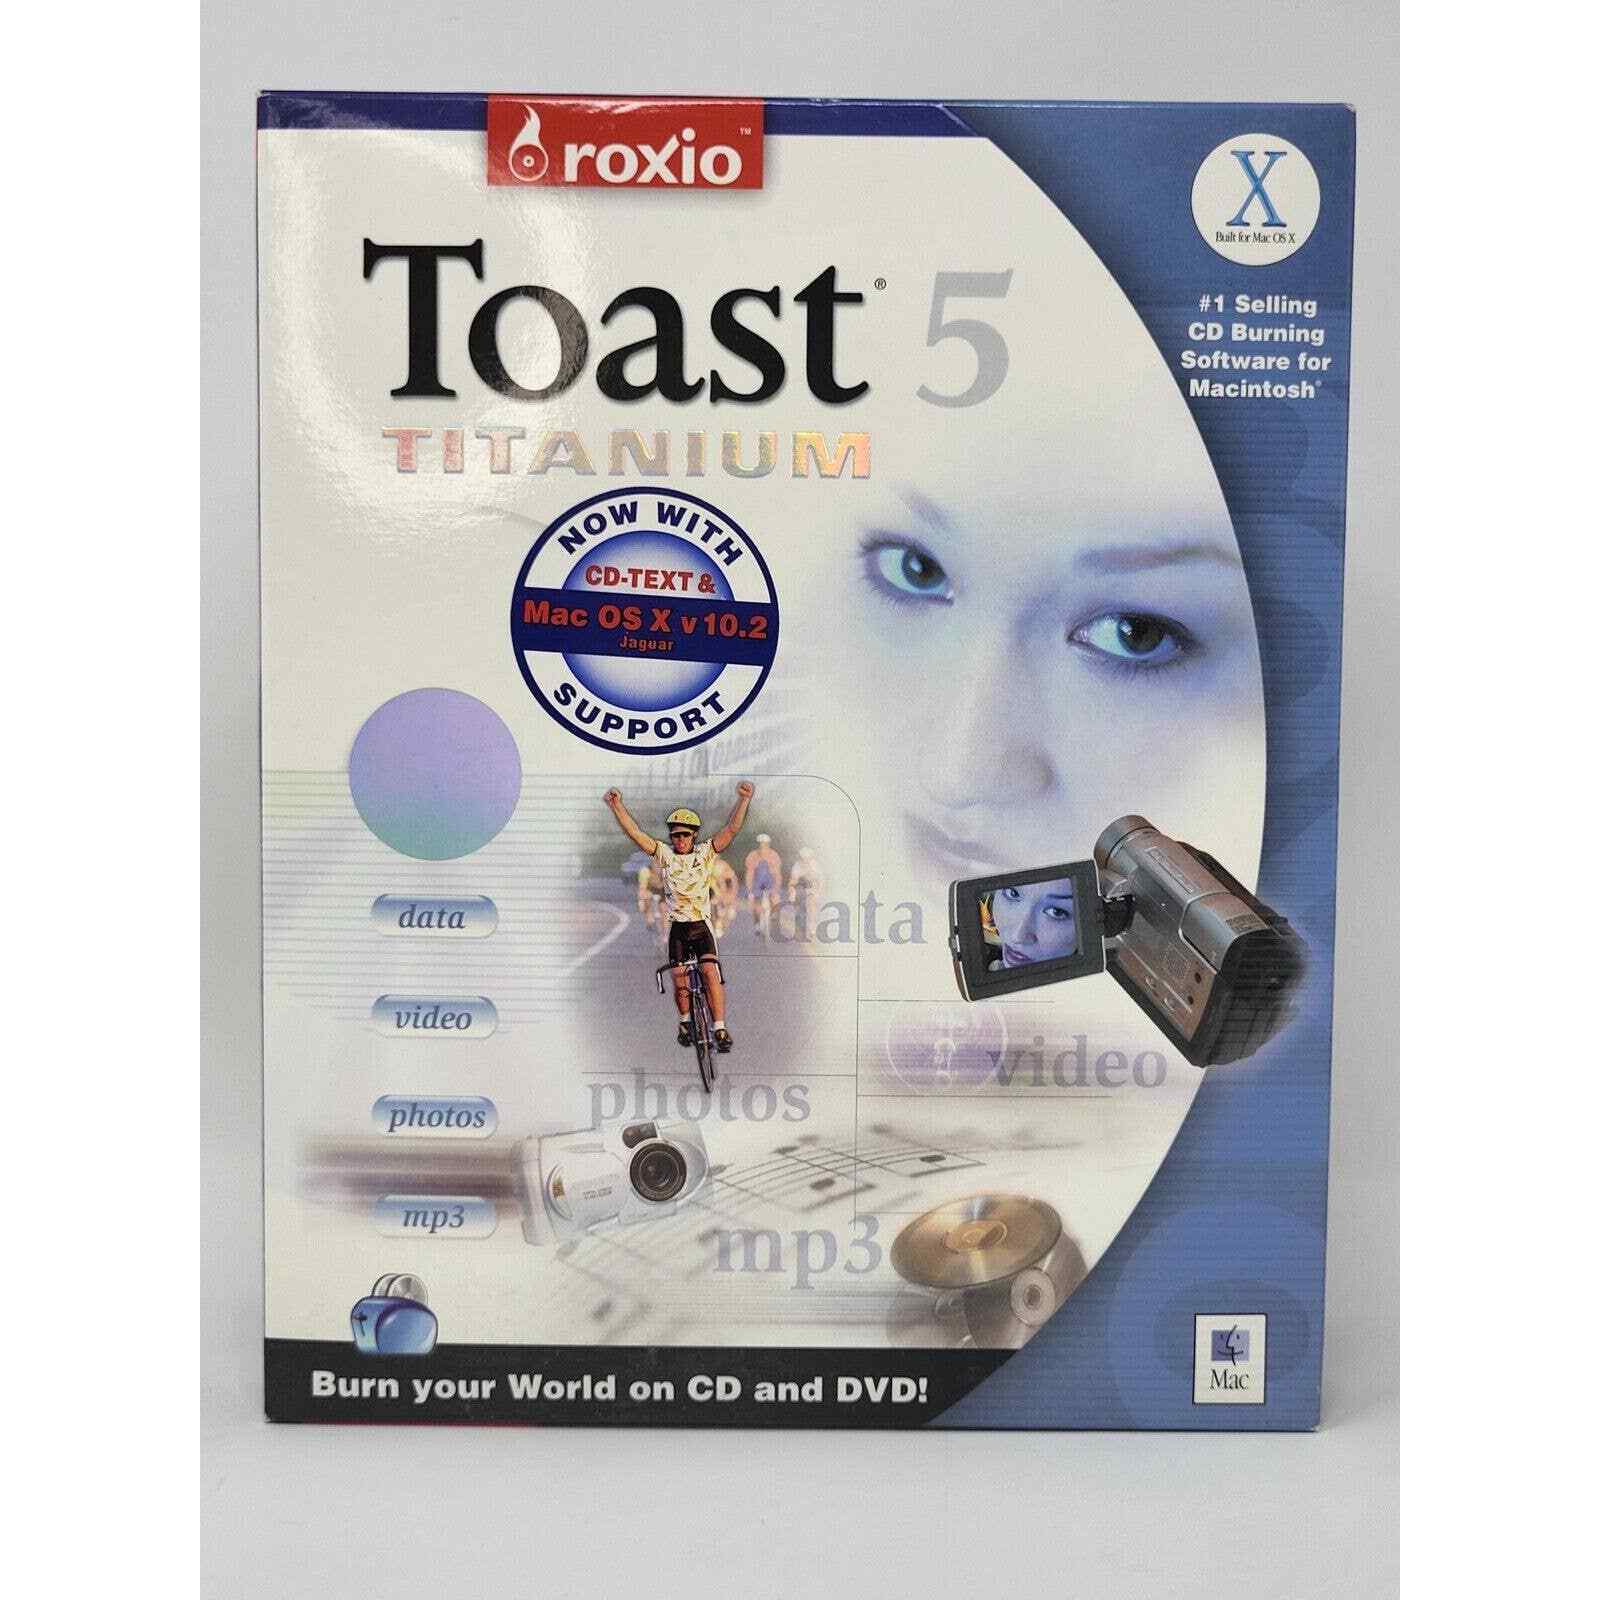 Roxio Toast Titanium 5 for Mac New in Sealed Box